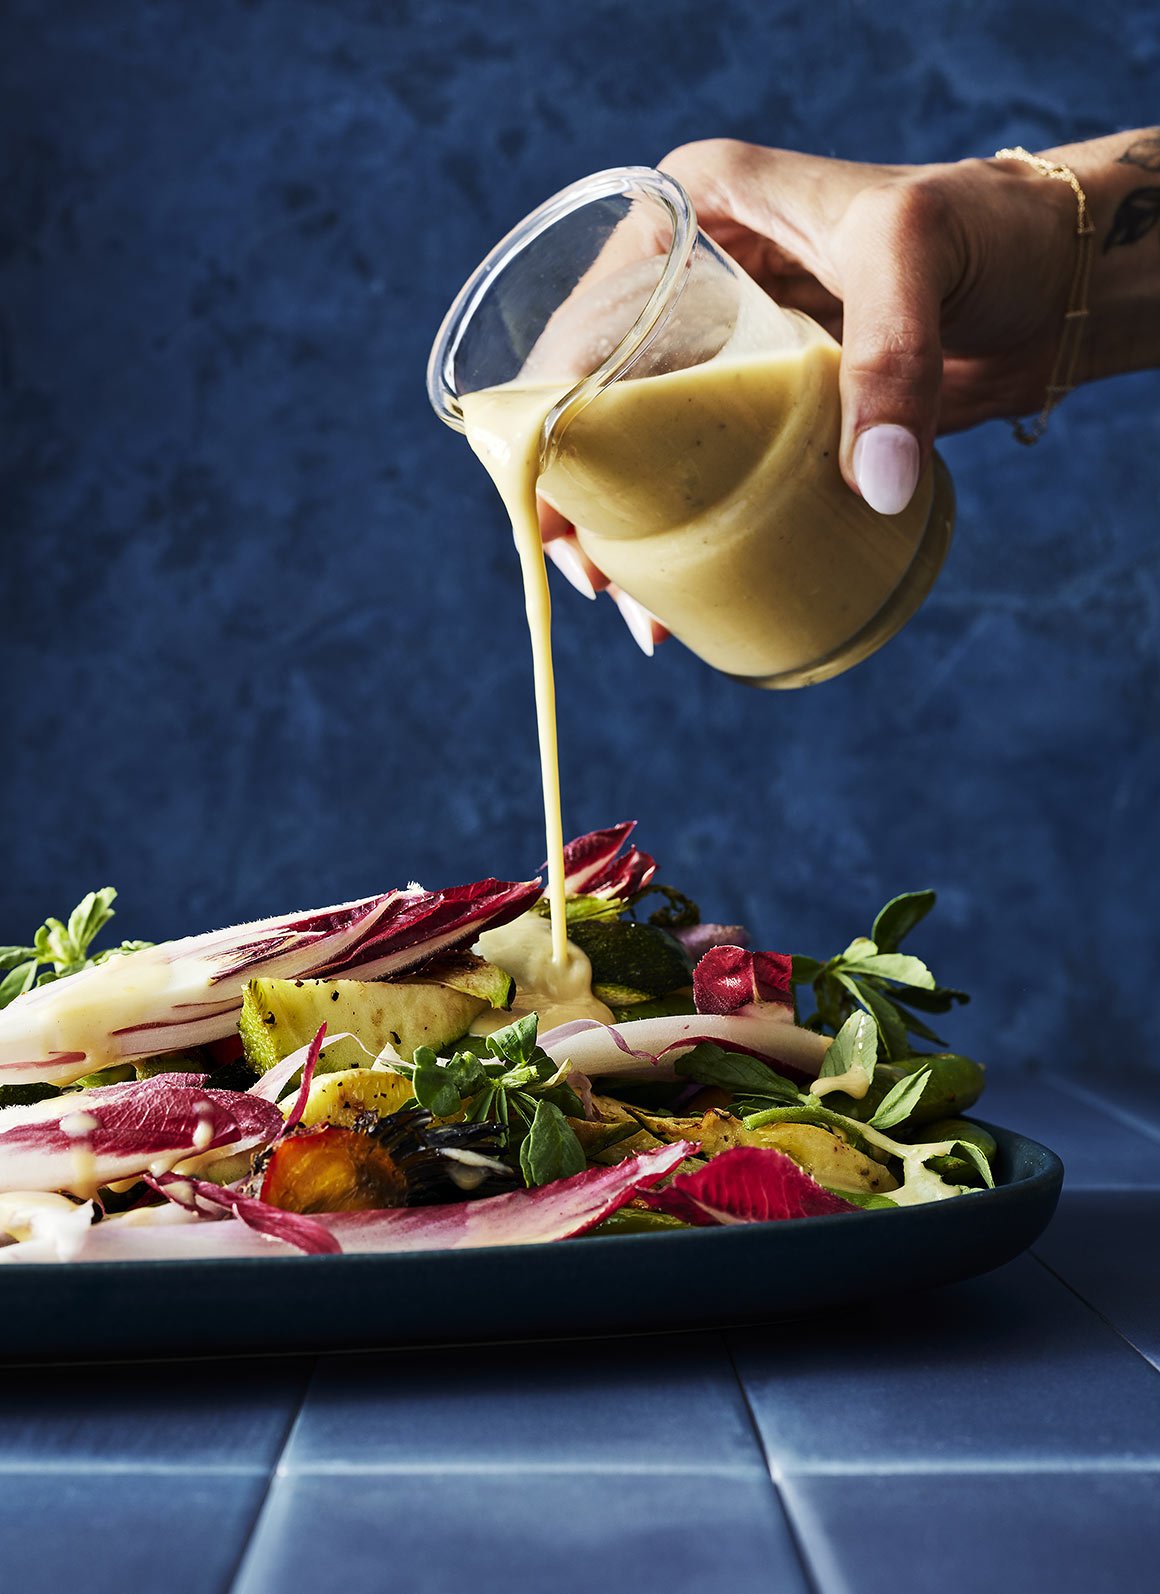 Tahini-Dressing-salad-cook-book-recipe-intuitive-eating-diet-kale-junkie-heath-wellness-food-photographer-kolenko-lifespan-heathspan.jpg